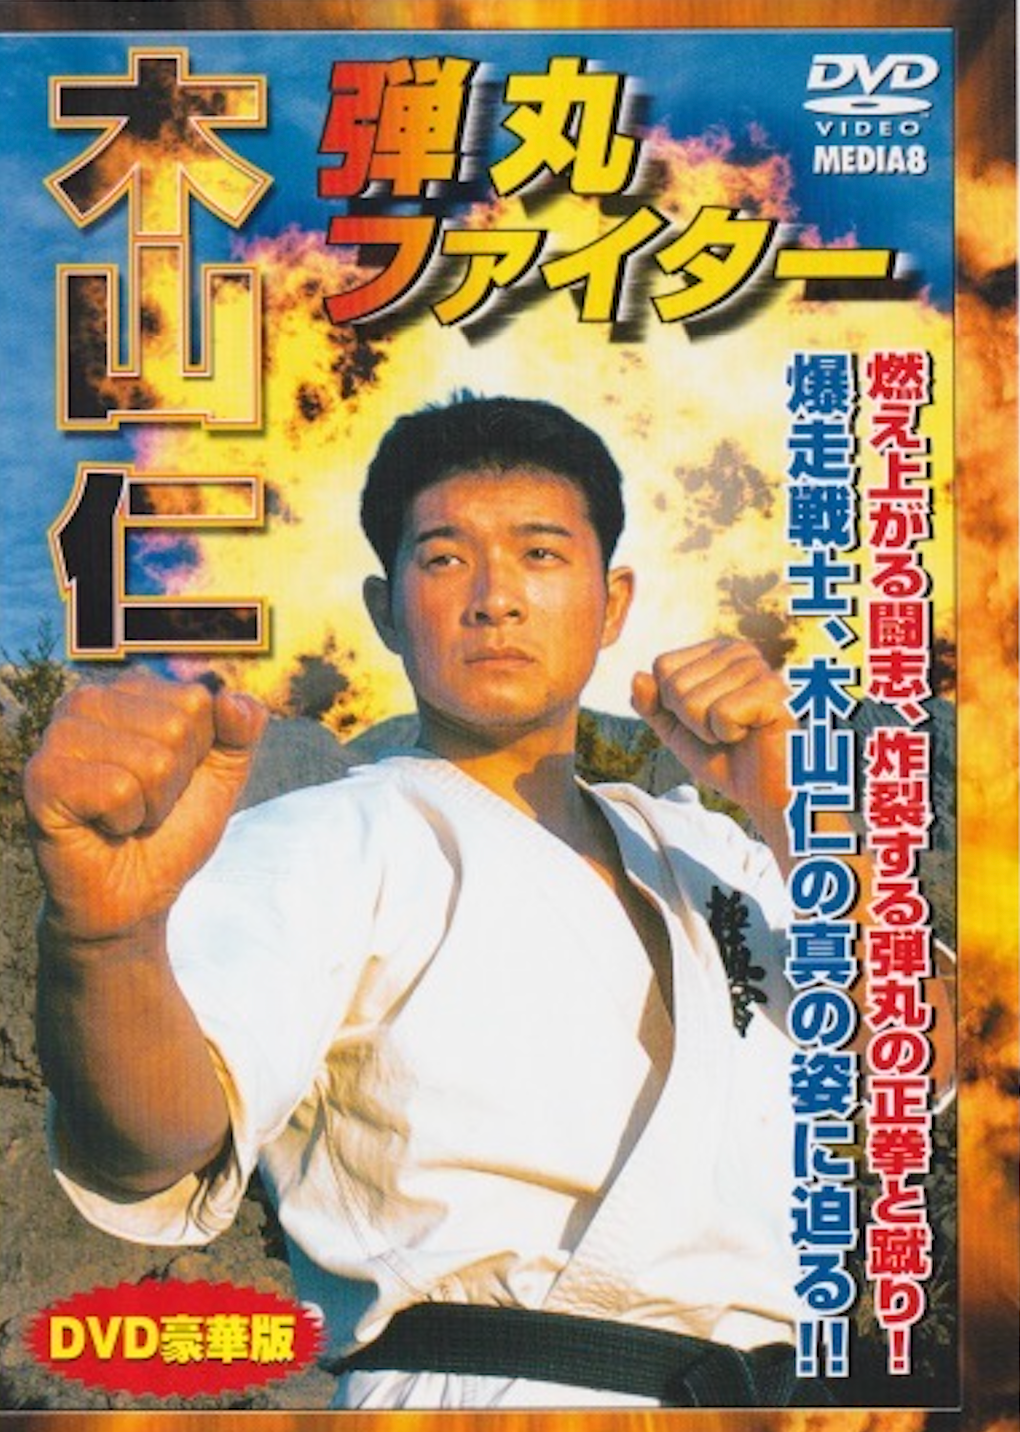 Hitoshi Kiyama Kyokushin Bullet Fighter DVD